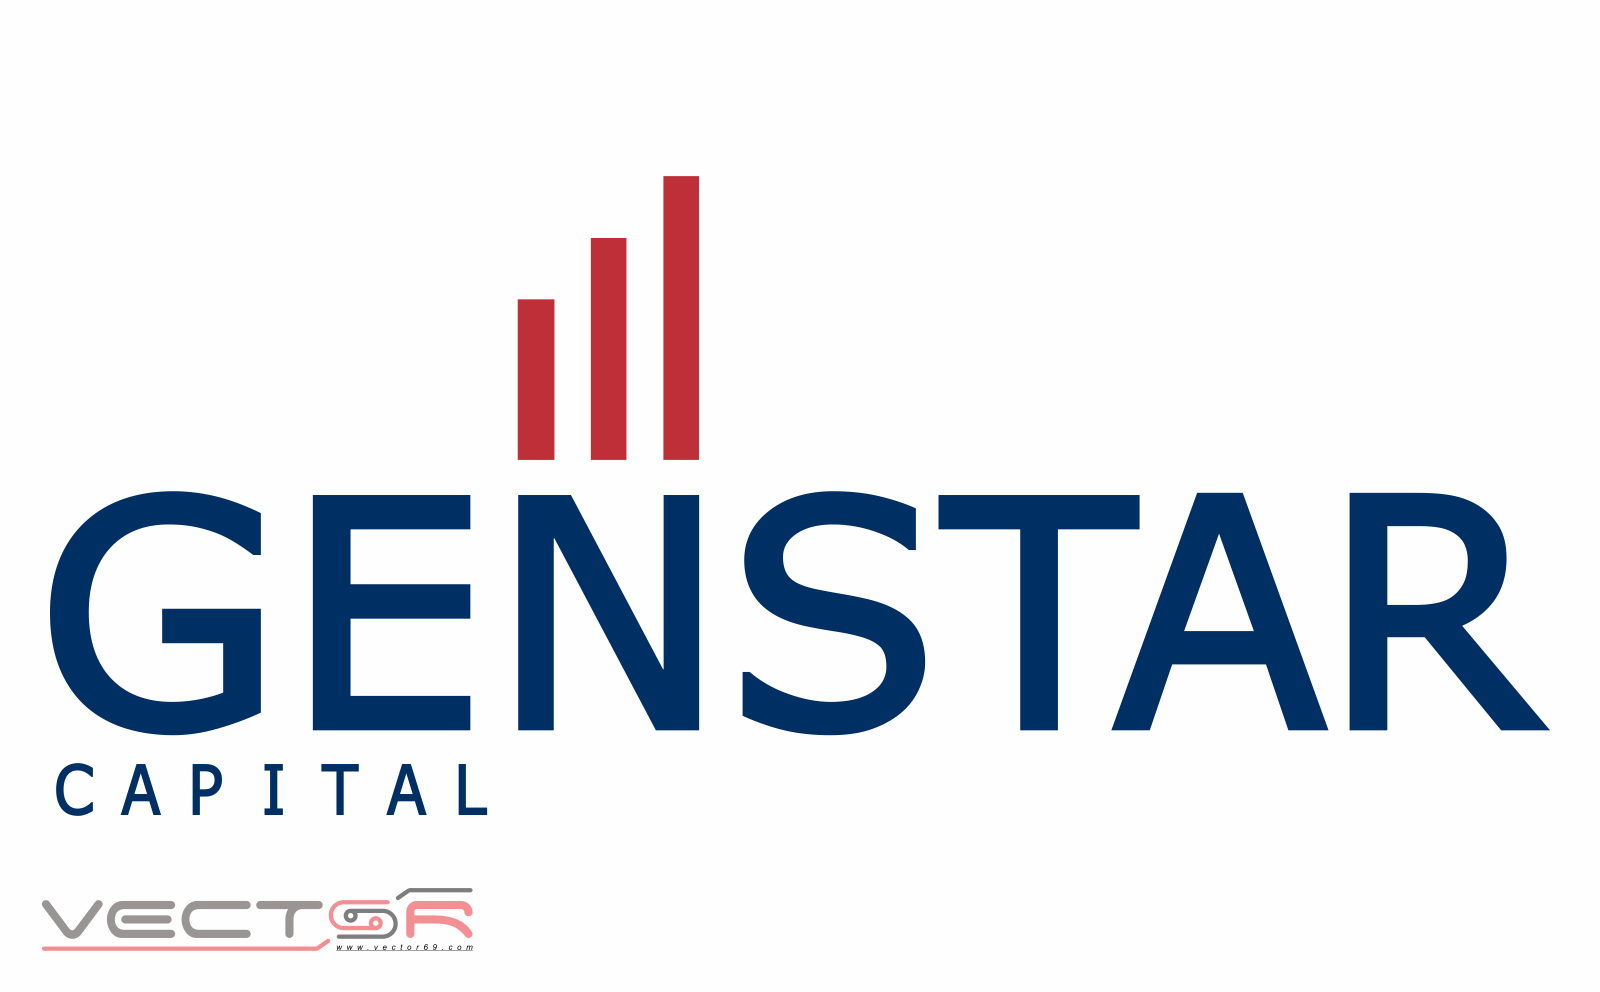 Genstar Capital Logo - Download Transparent Images, Portable Network Graphics (.PNG)